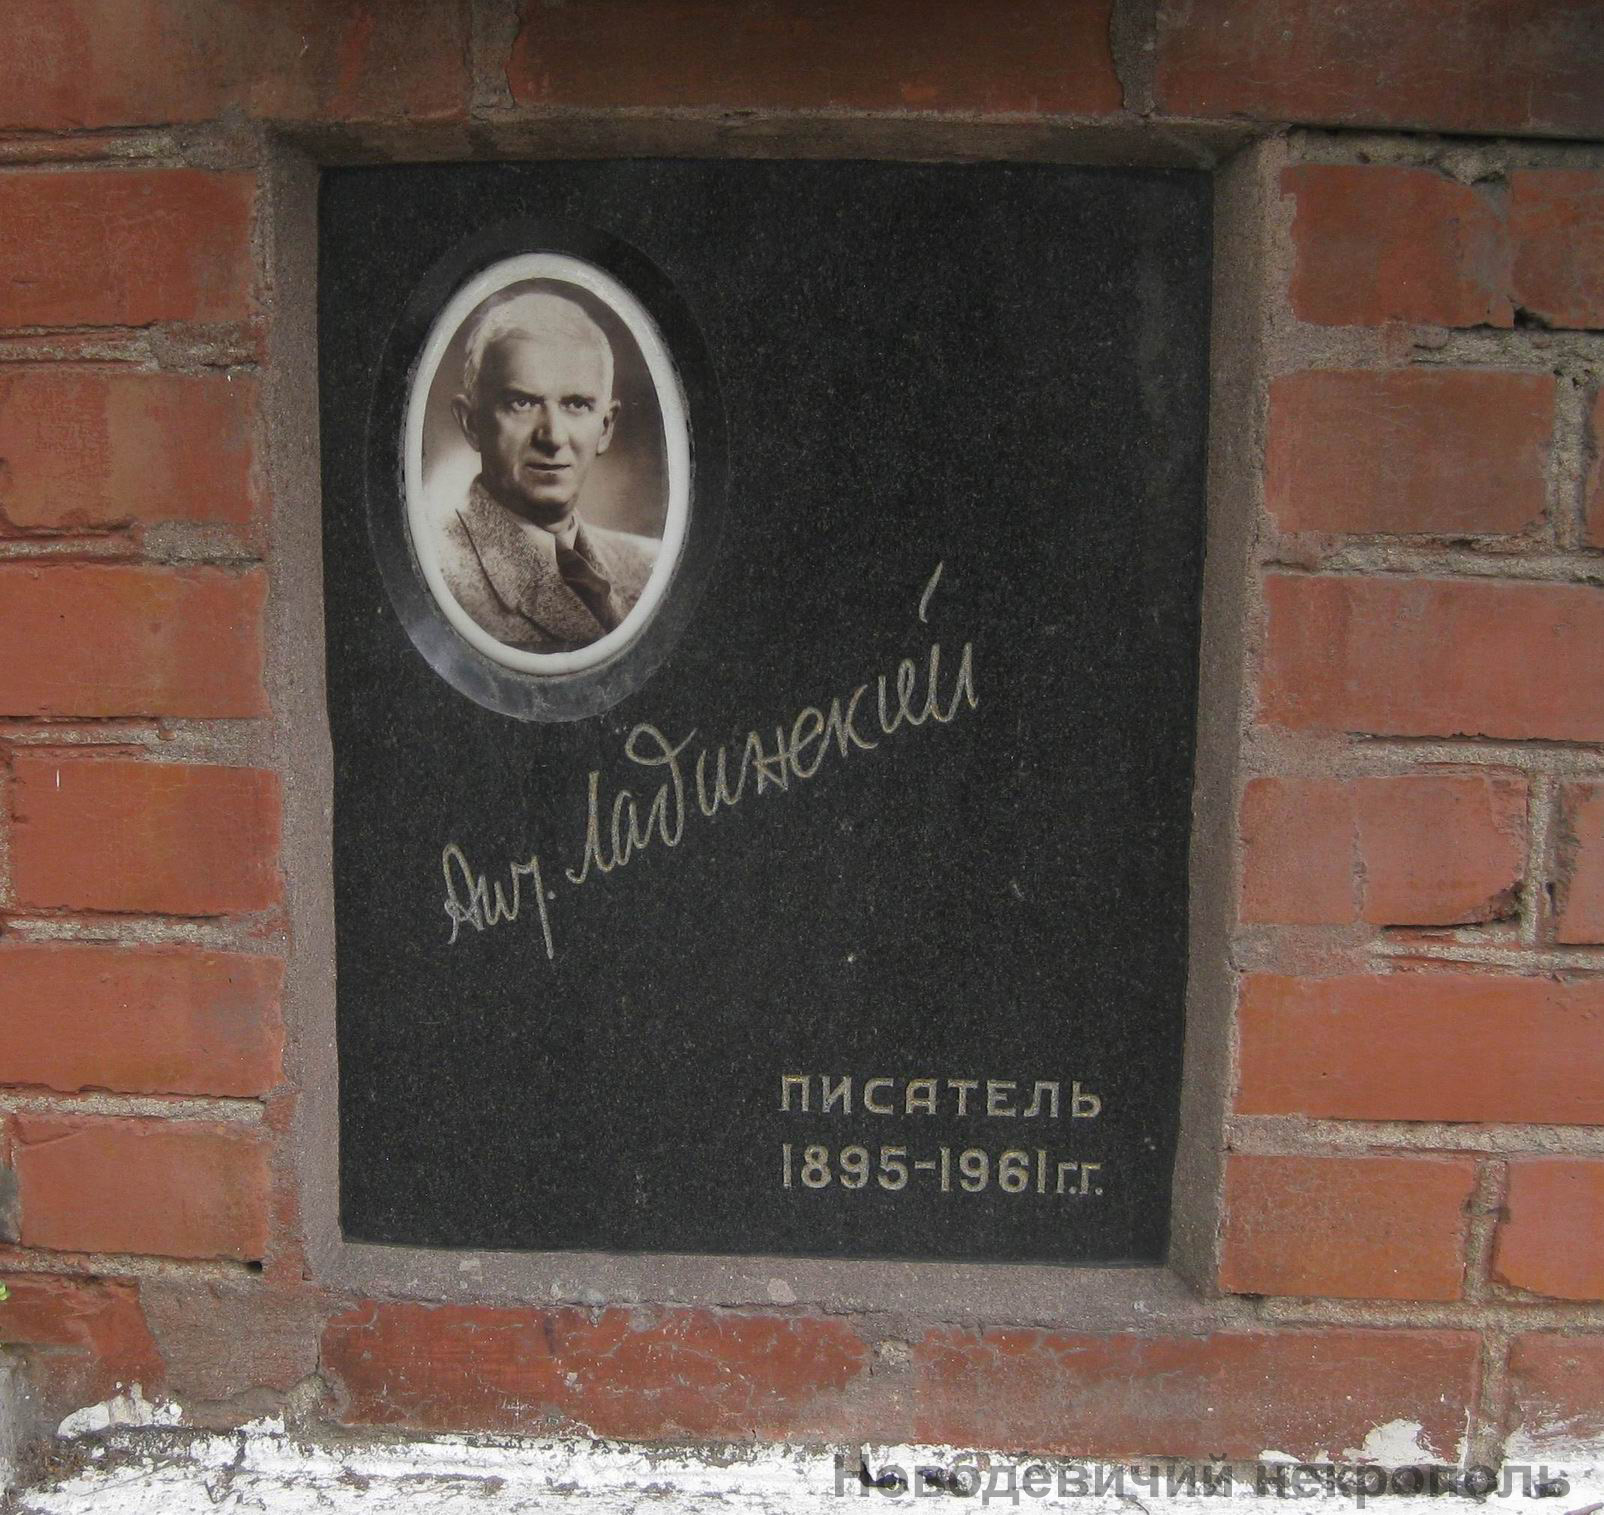 Плита на нише Ладинского А.П. (1895-1961), на Новодевичьем кладбище (колумбарий [122]-7-4).